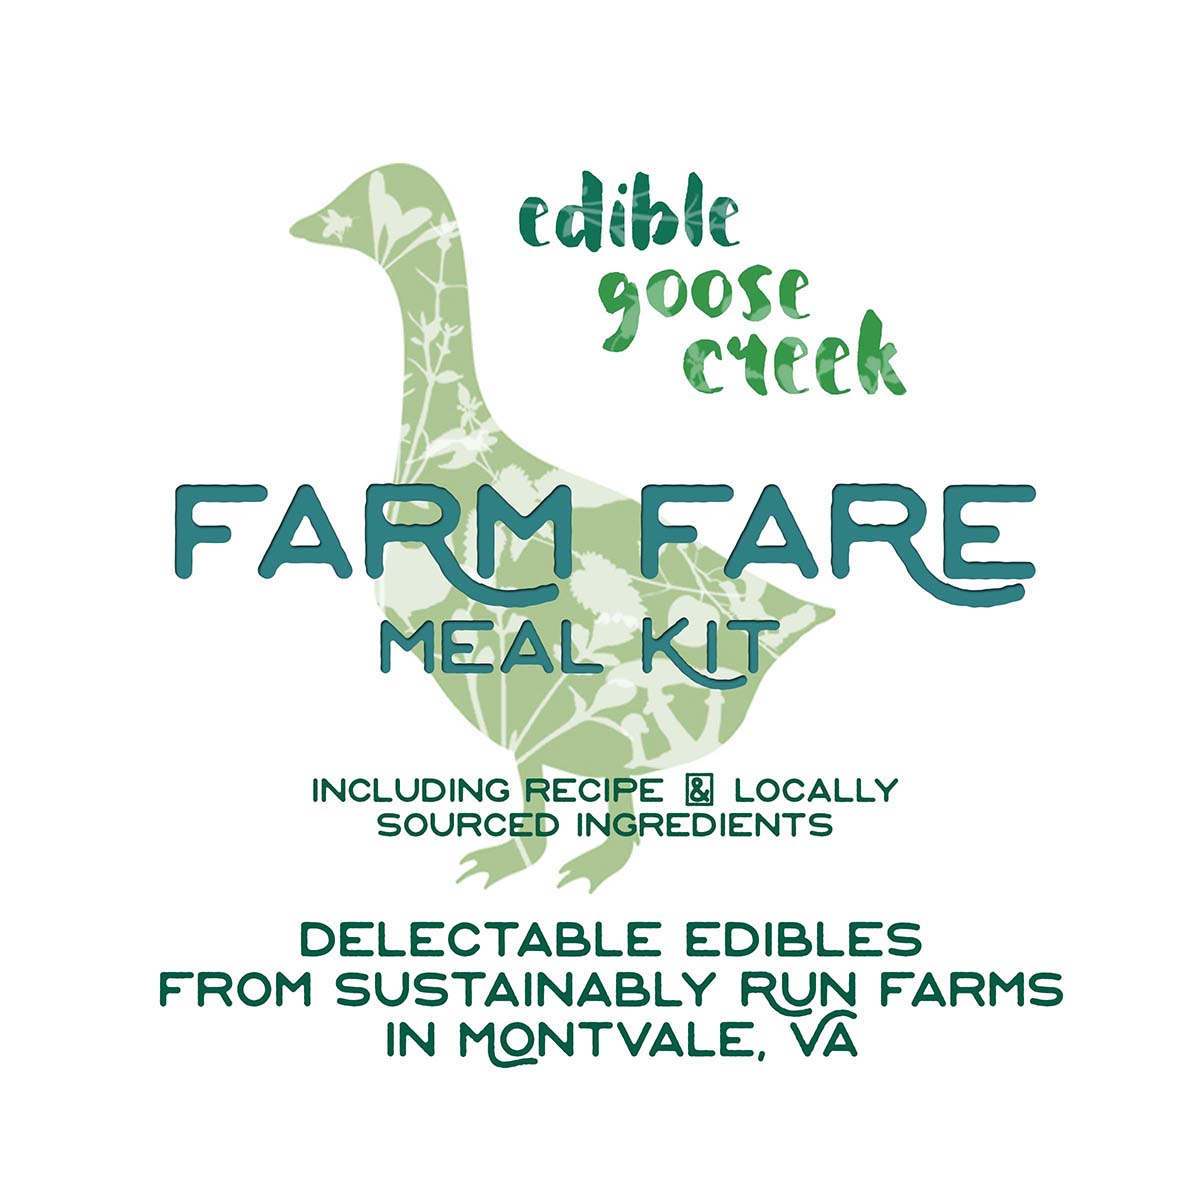 Edible Goose Creek meal kit label